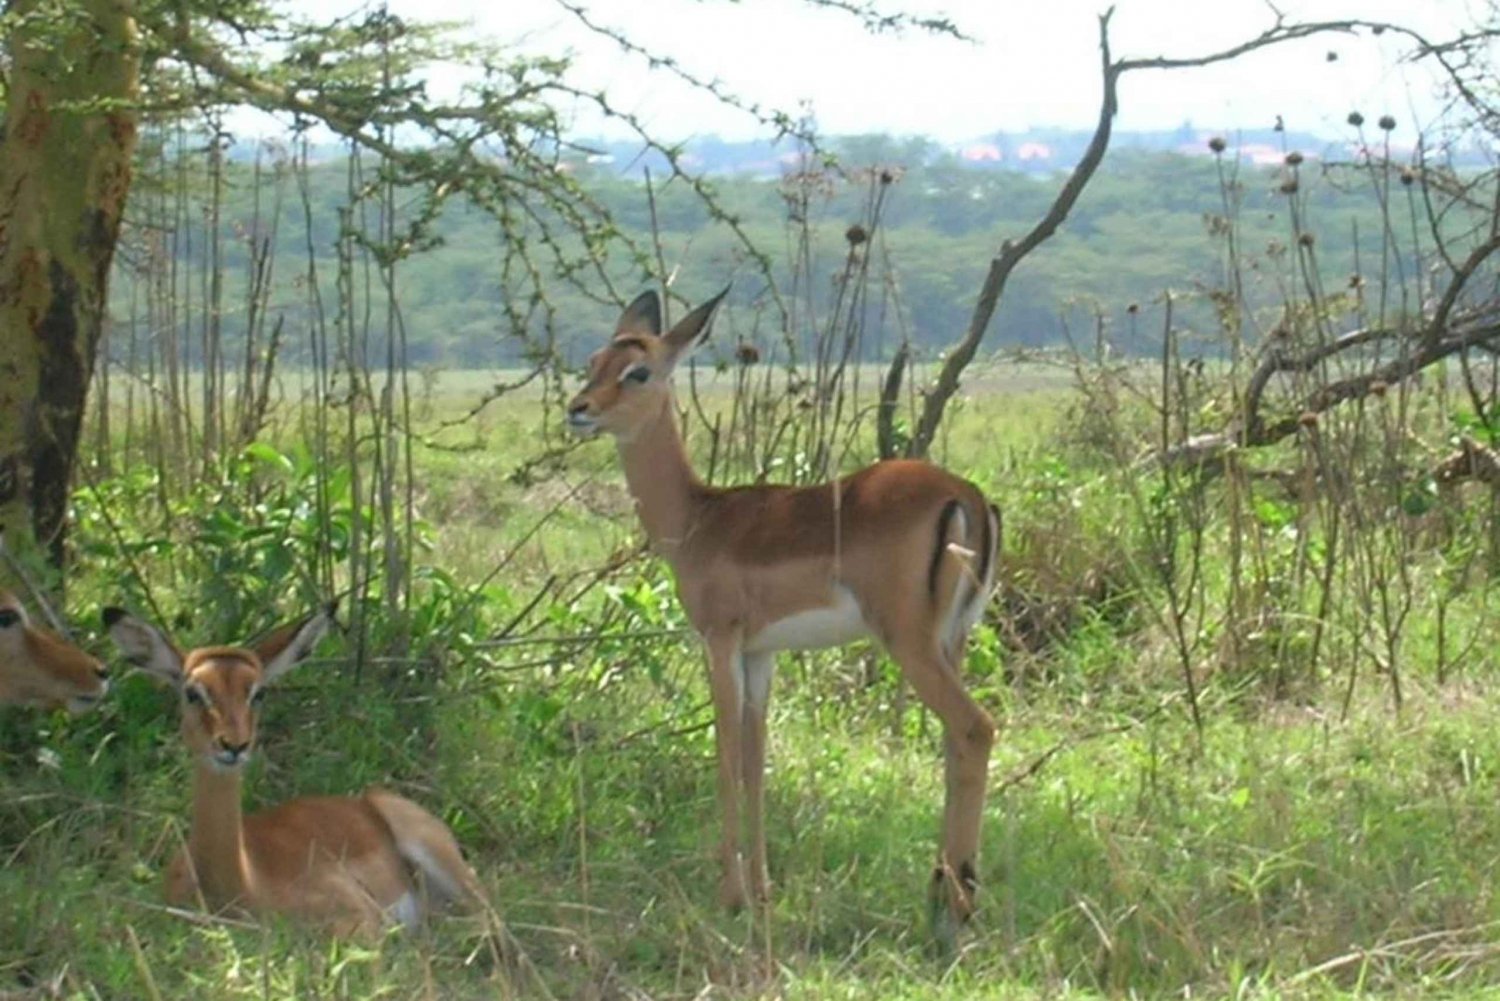 From Nairobi: Private Nairobi National Park Tour